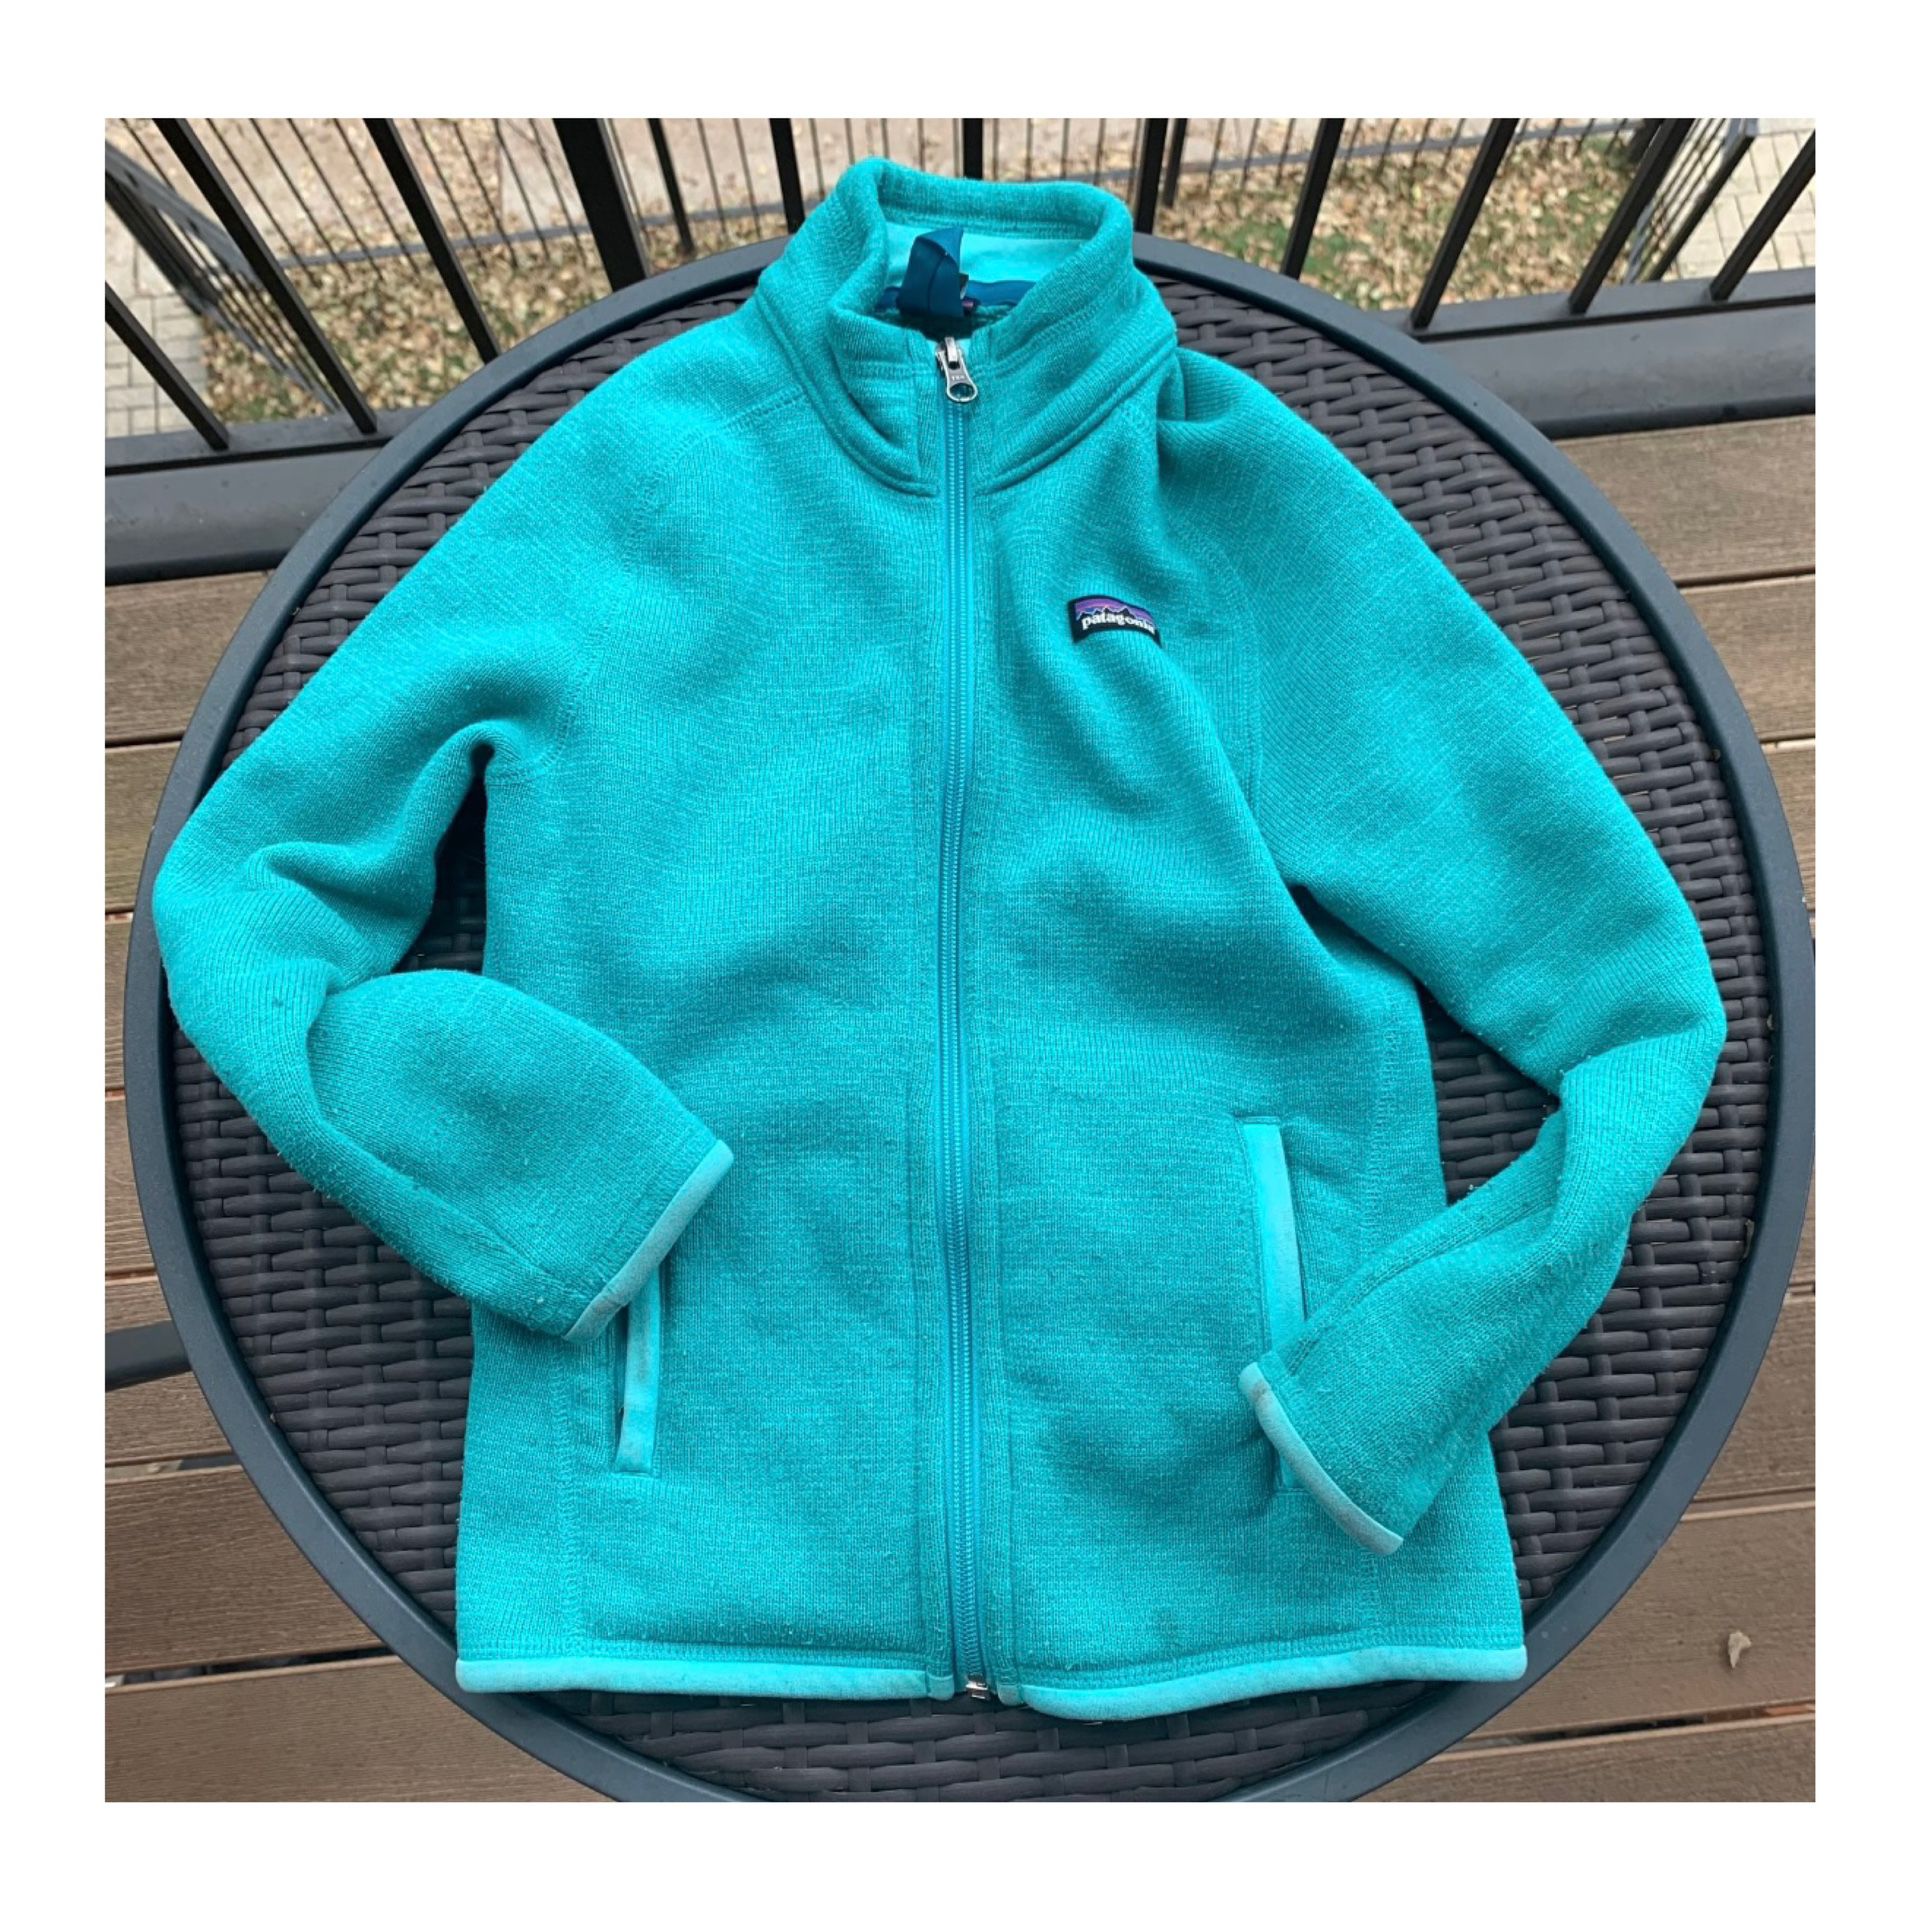 Patagonia Teal Zip Up Jacket Size Small 7-8 Girls